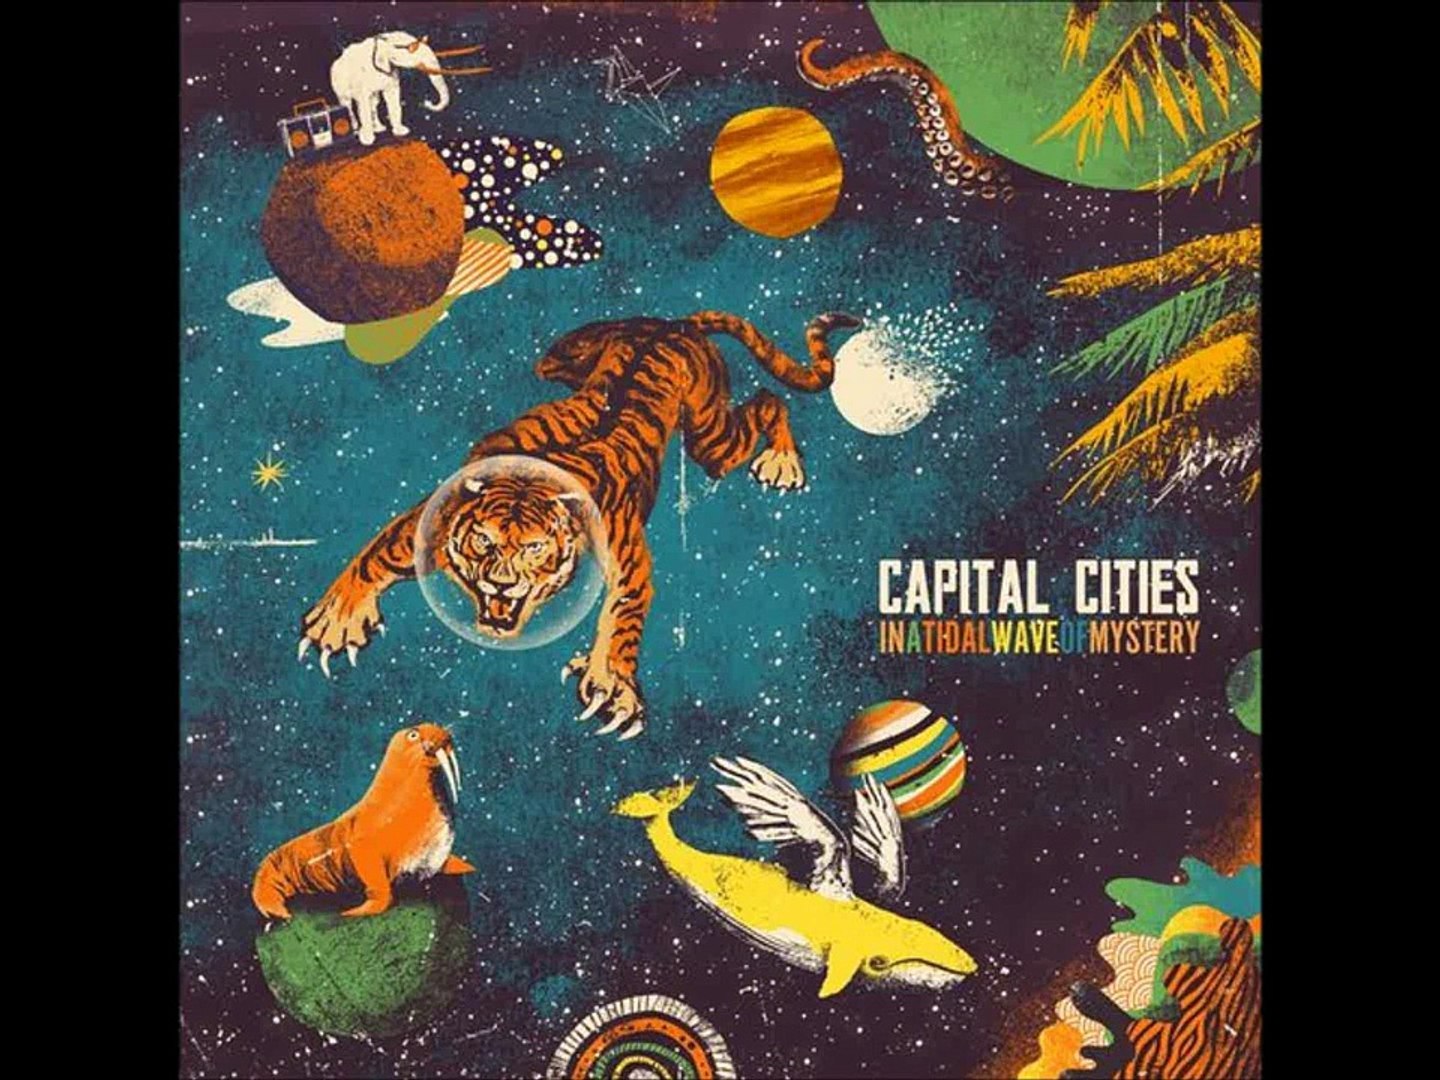 Capital Cities - Kangaroo Court